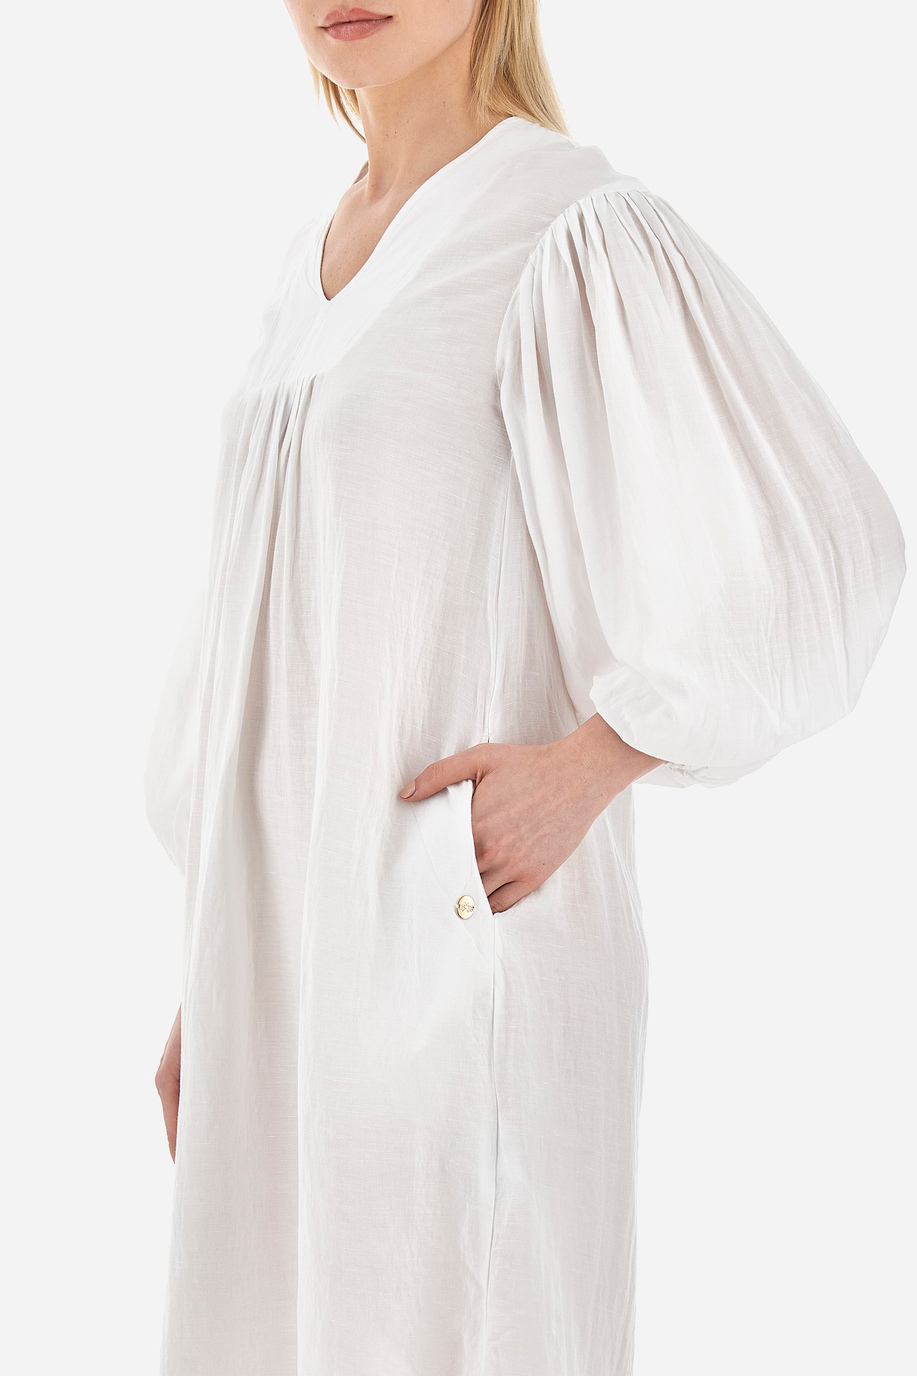 Robe femme en polylin, manches 3/4 - Valaria - Robes | La Martina - Official Online Shop